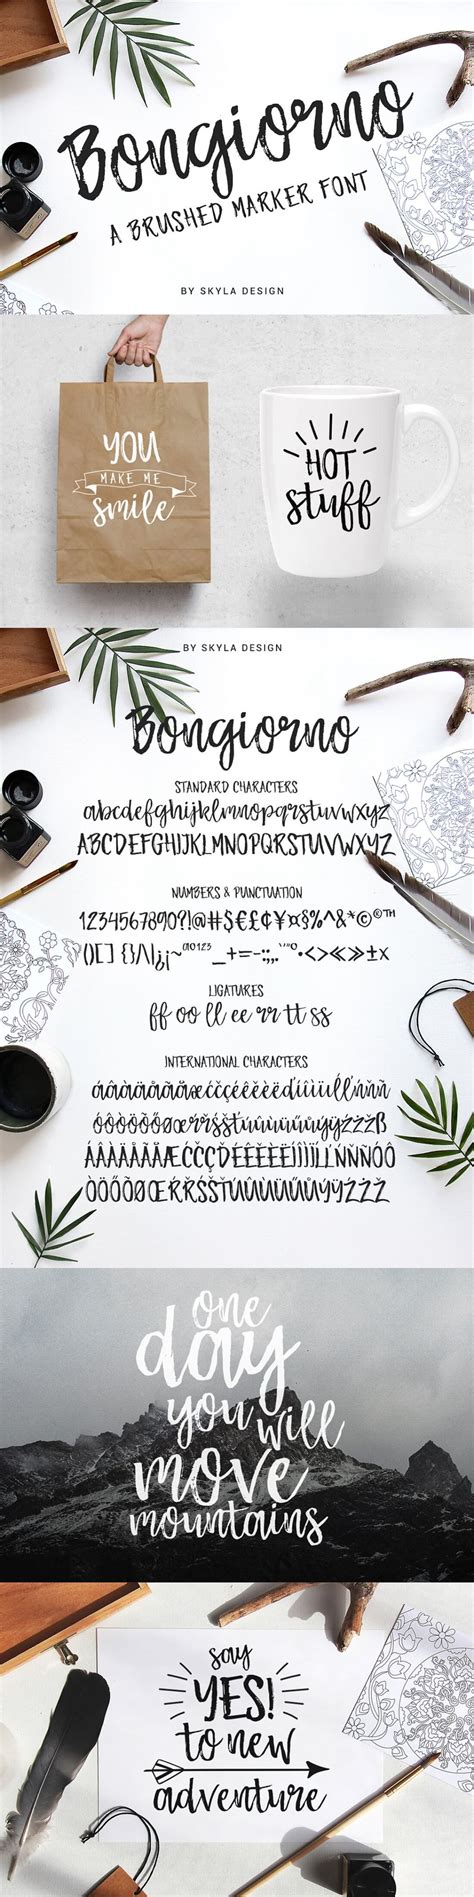 Beautiful Handwritten Fonts From Skyla Design Only Business Legions Blog